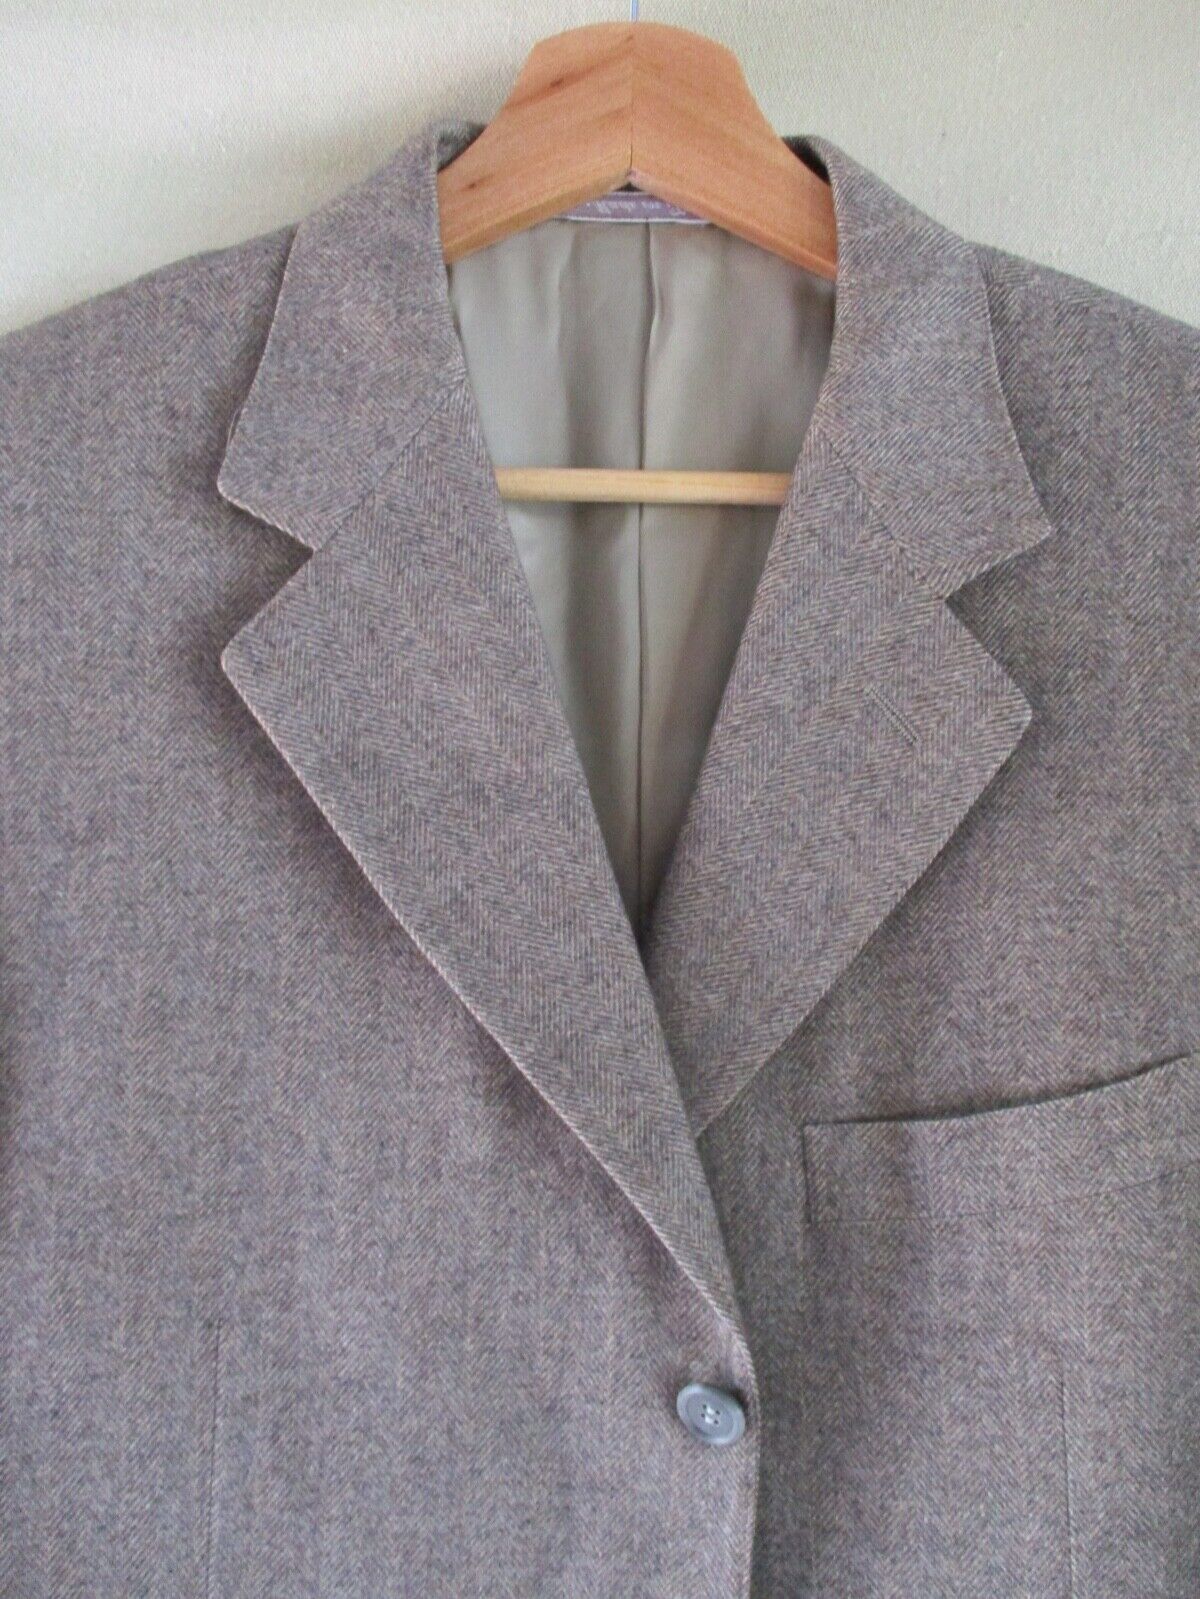 Canali Brown Silk Cashmere Herringbone 3 Button Blazer Sport Coat Jacket 48 38r